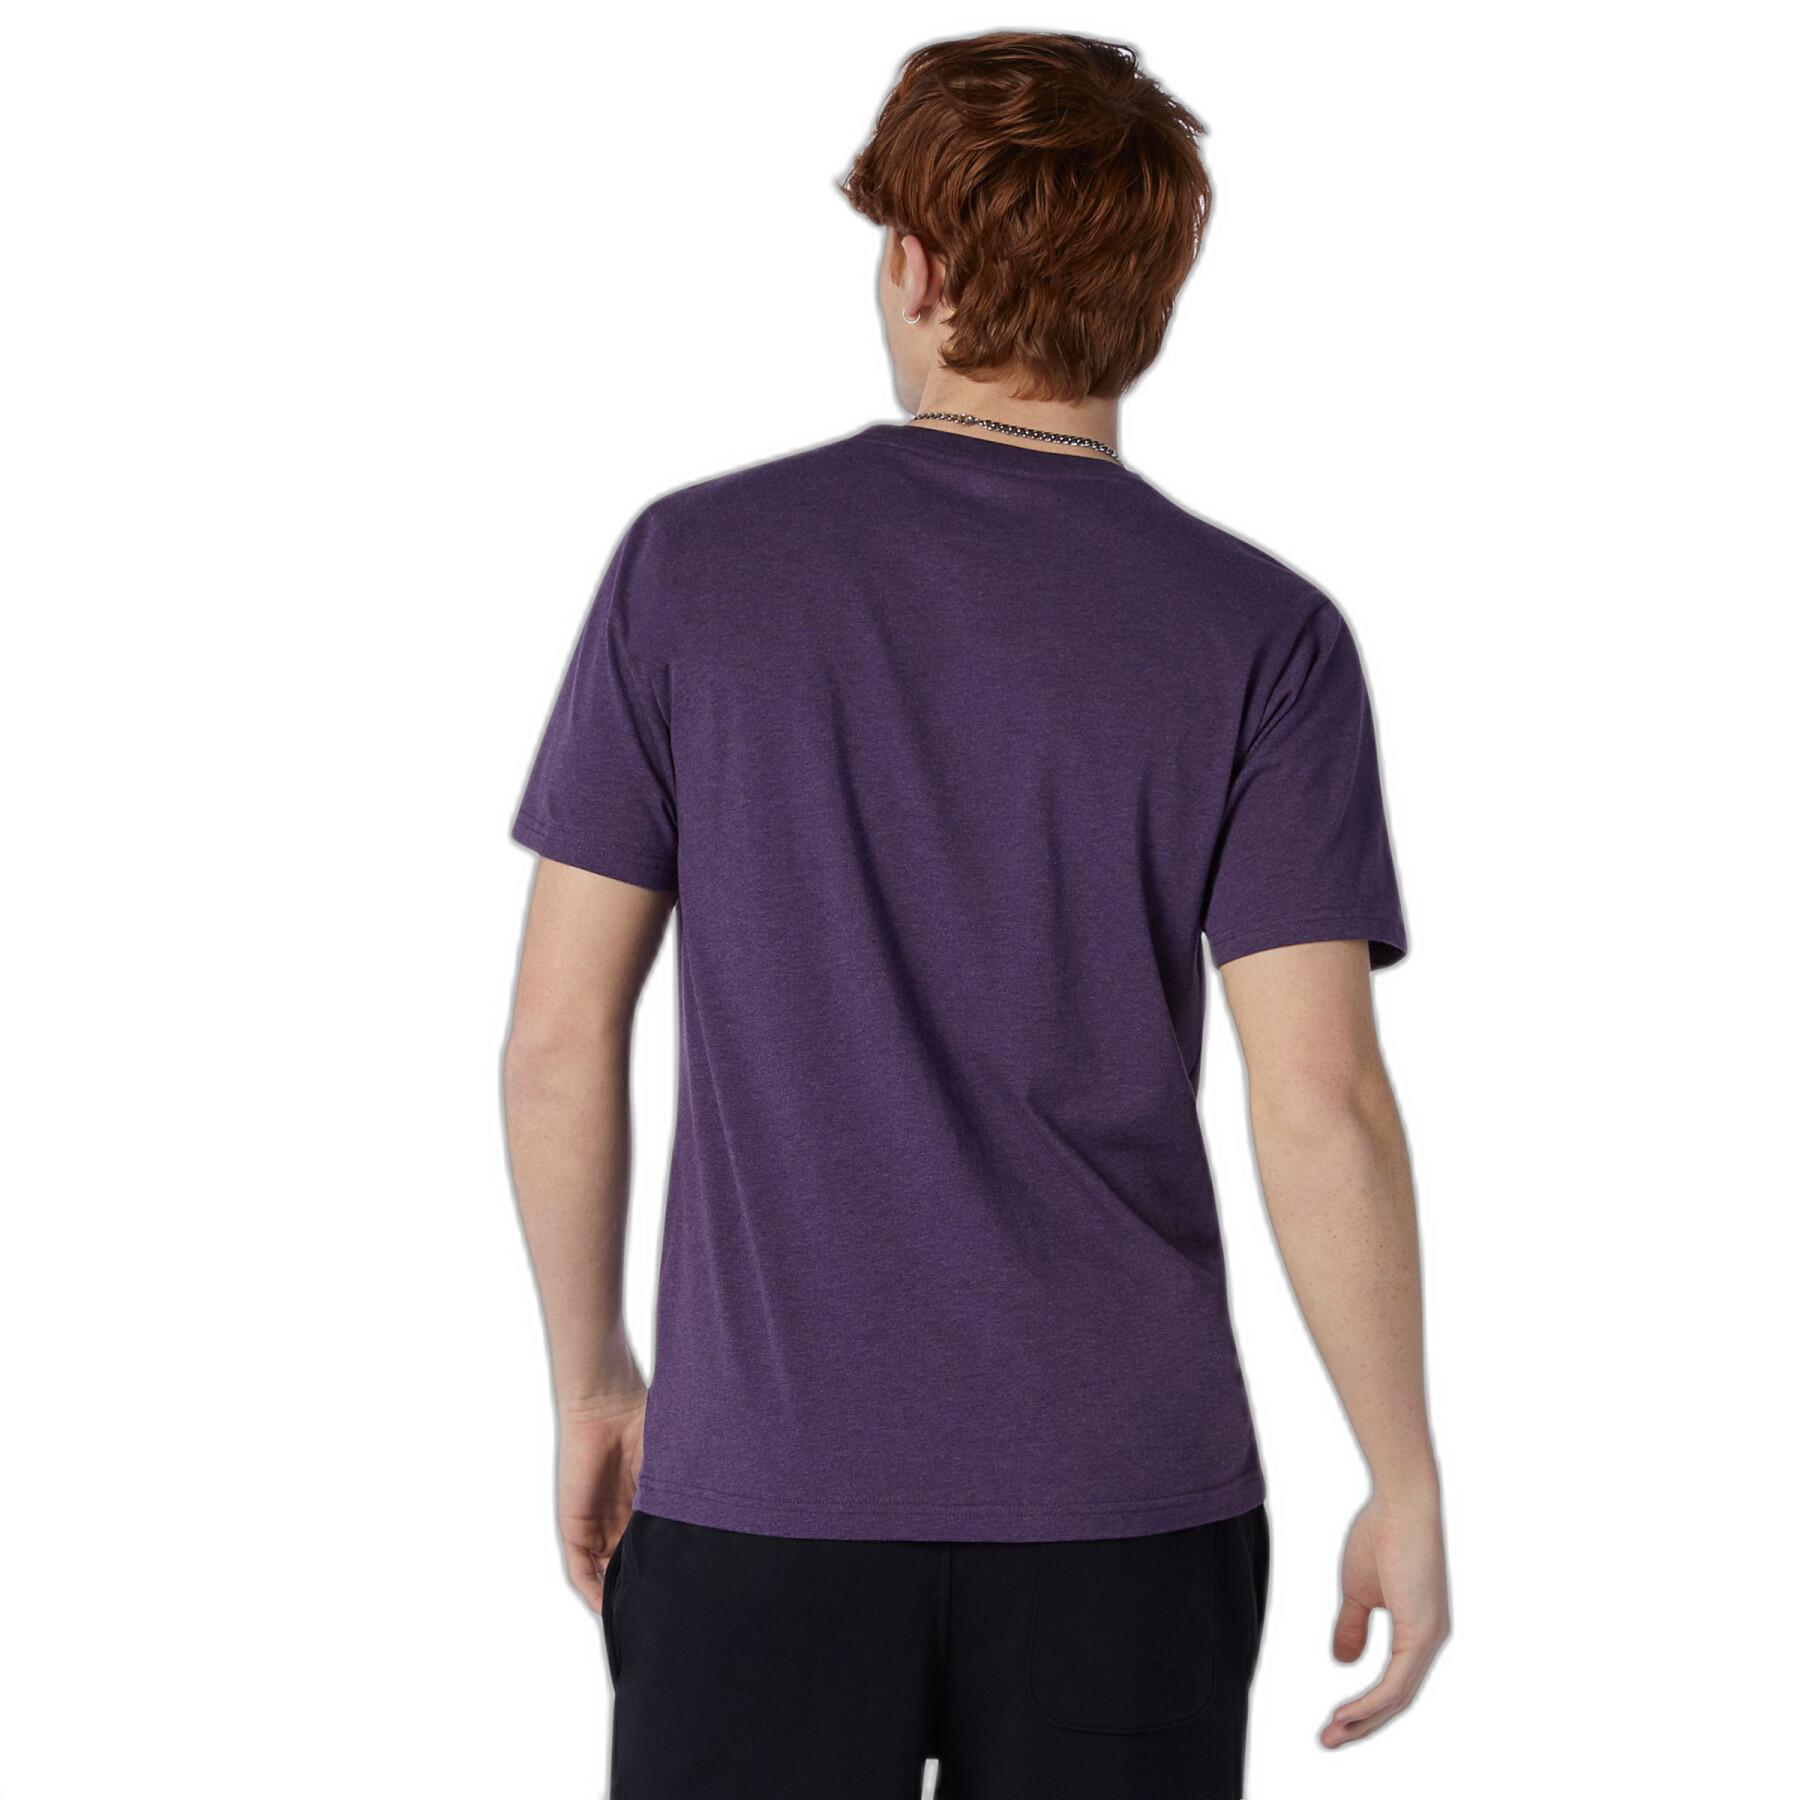 T-shirt New Balance essentials stacked logo